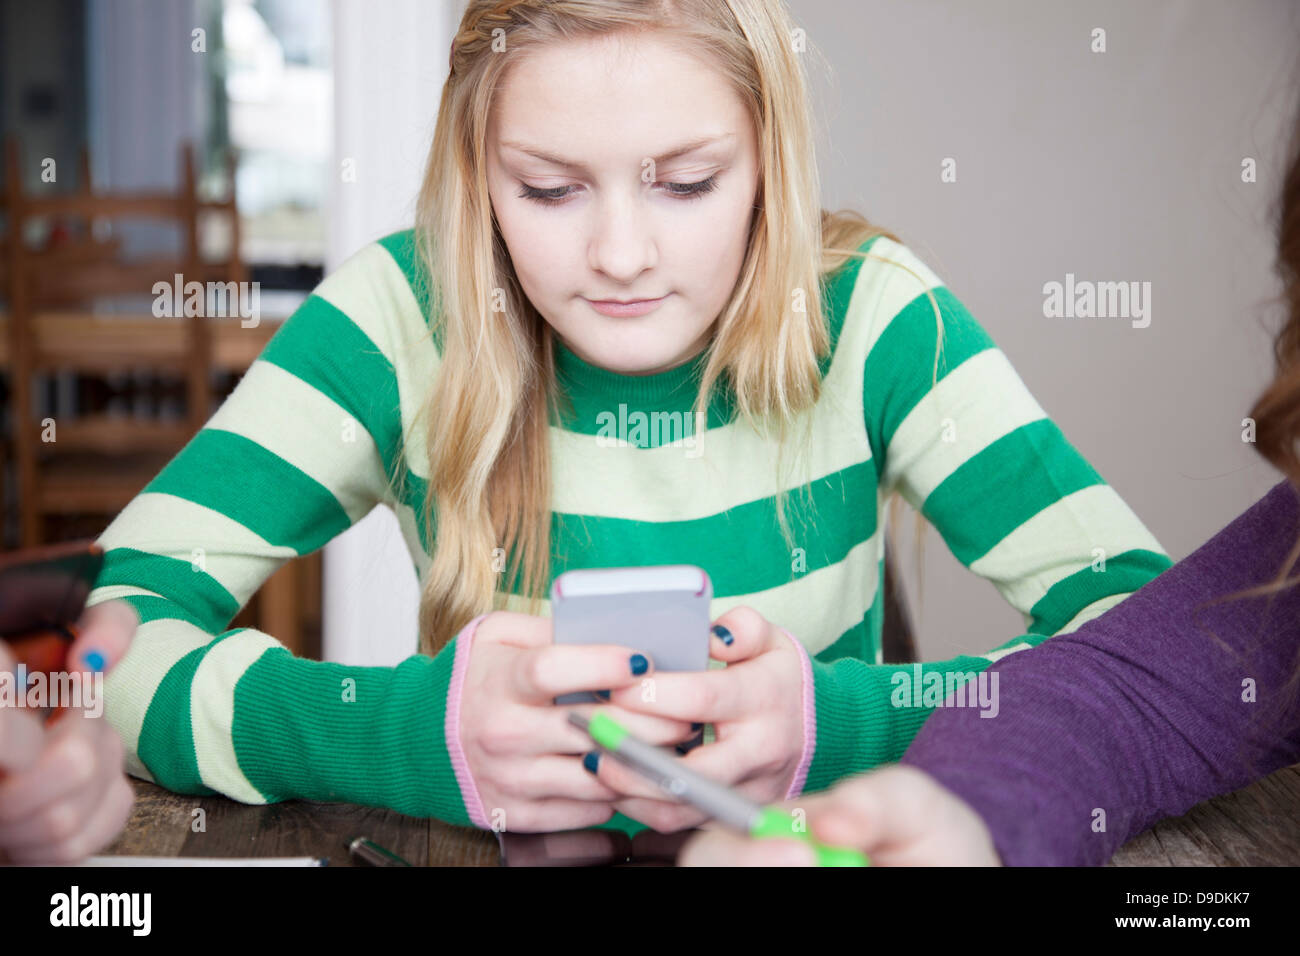 Girls sitting at table using smart phone Stock Photo